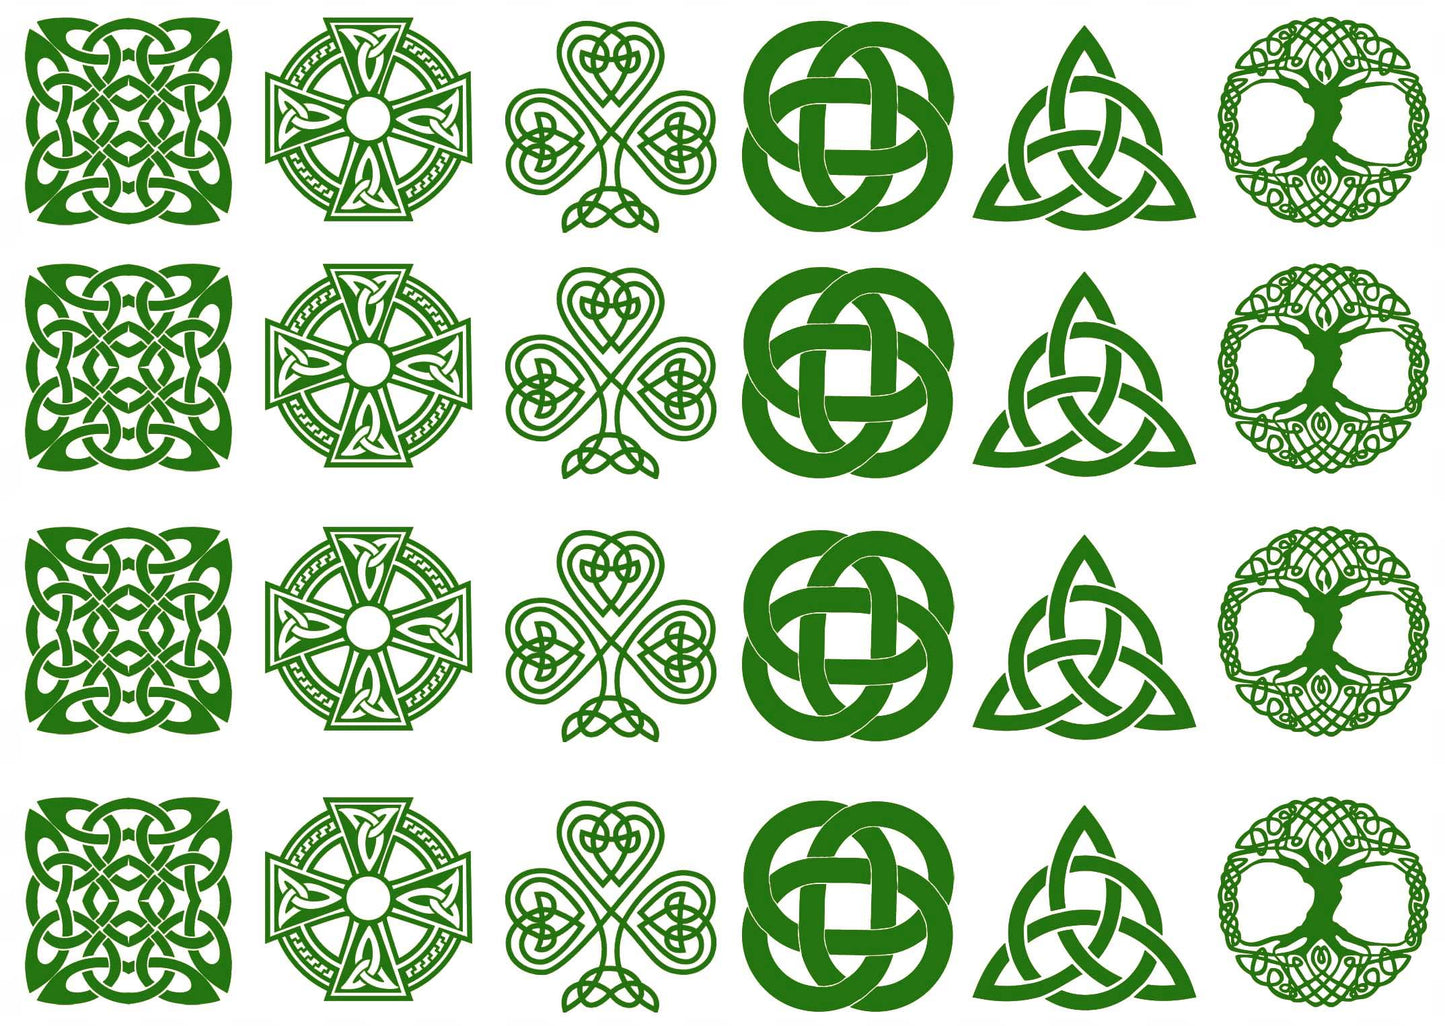 Celtic Knots 24 pcs 1" Green Fused Glass Decals